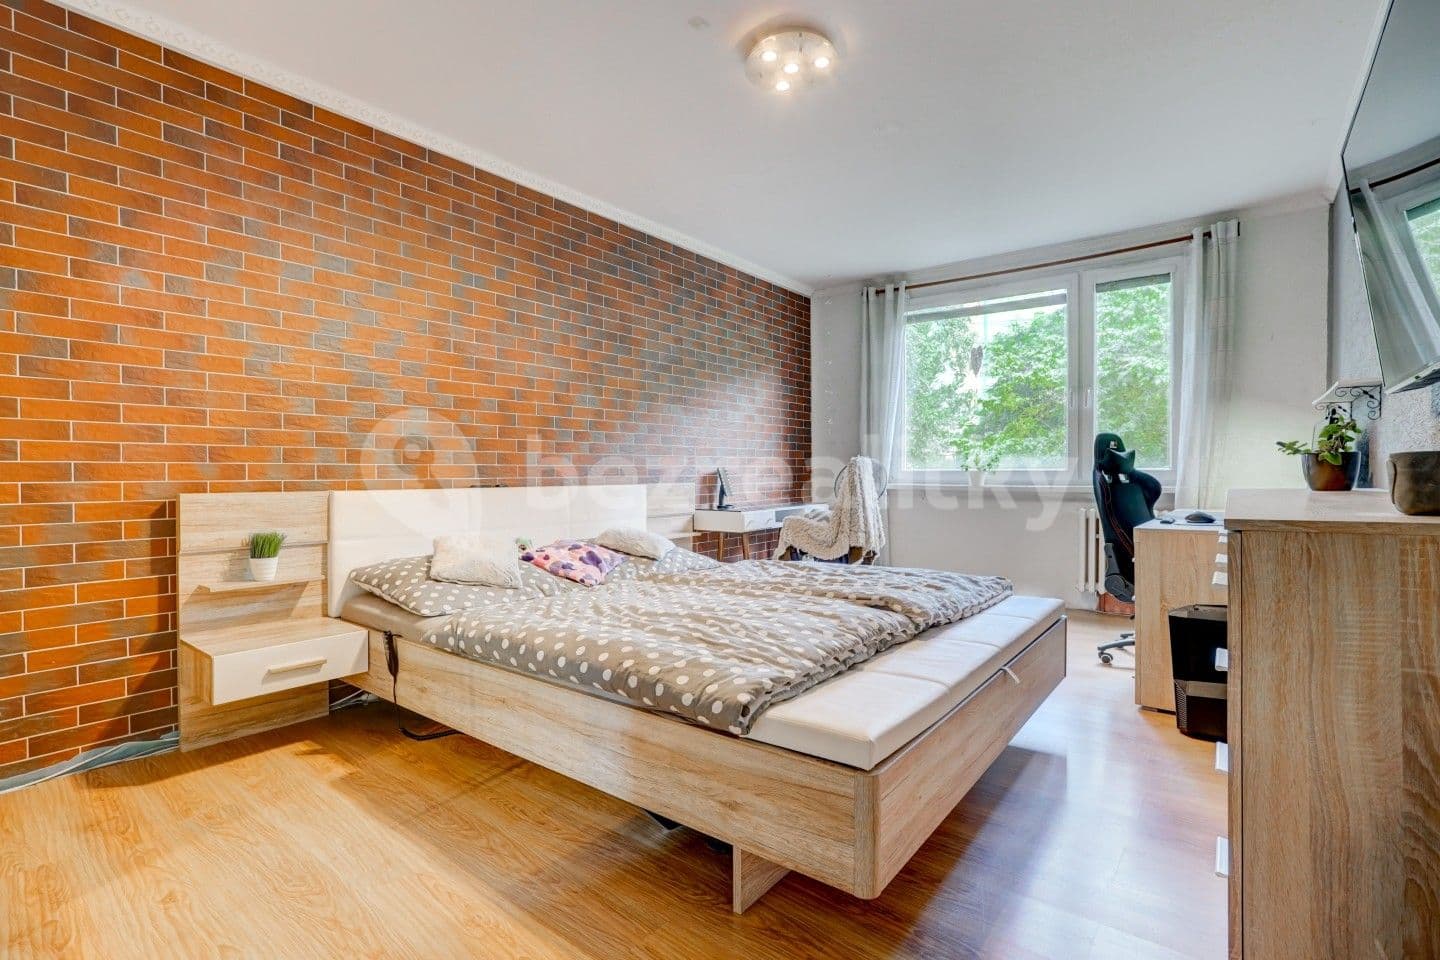 4 bedroom flat for sale, 99 m², Karla Čapka, Krupka, Ústecký Region